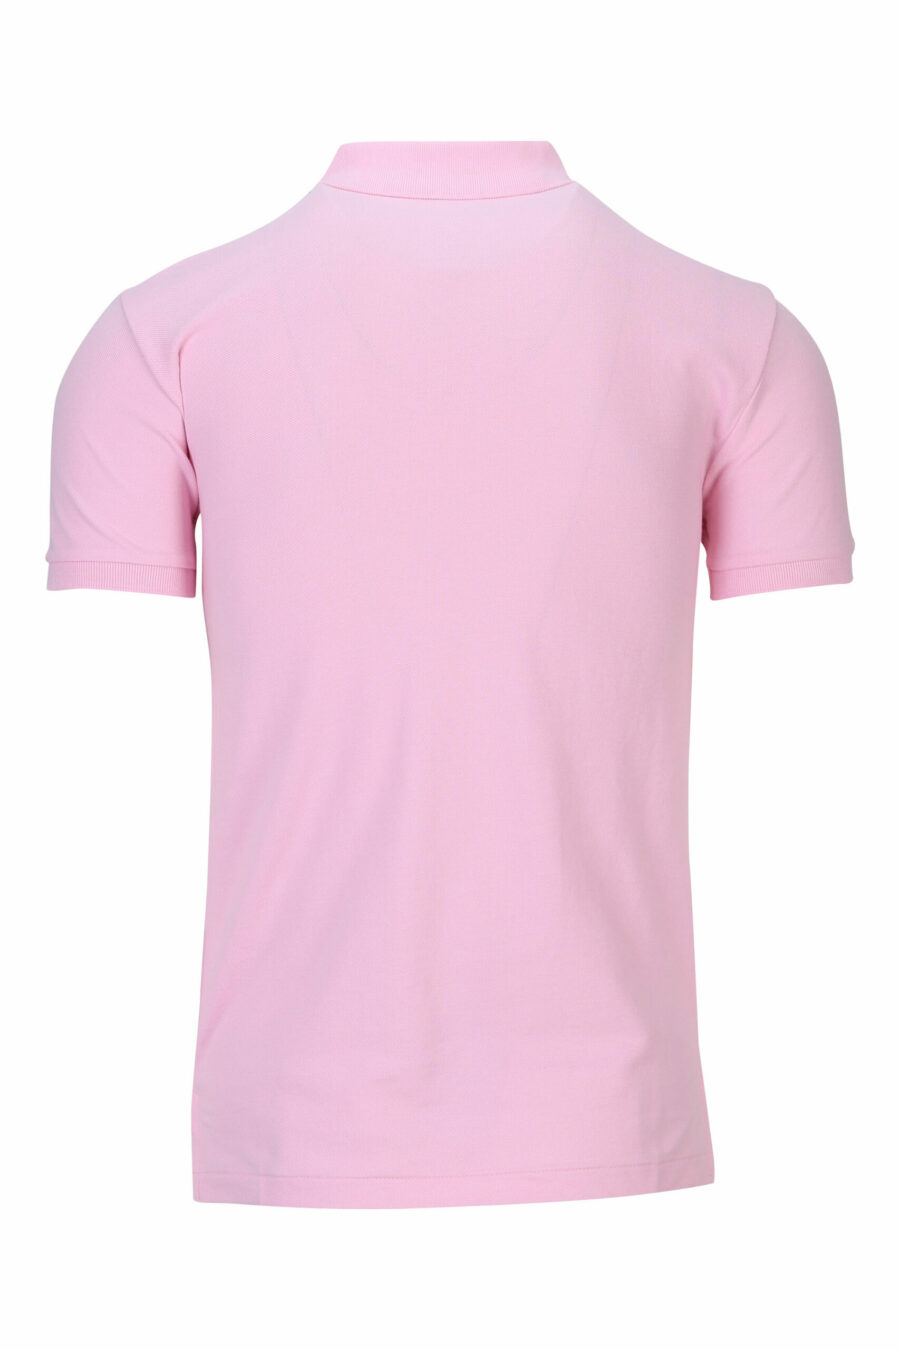 Pink polo shirt with mini-logo "polo" - 3615739771649 1 scaled